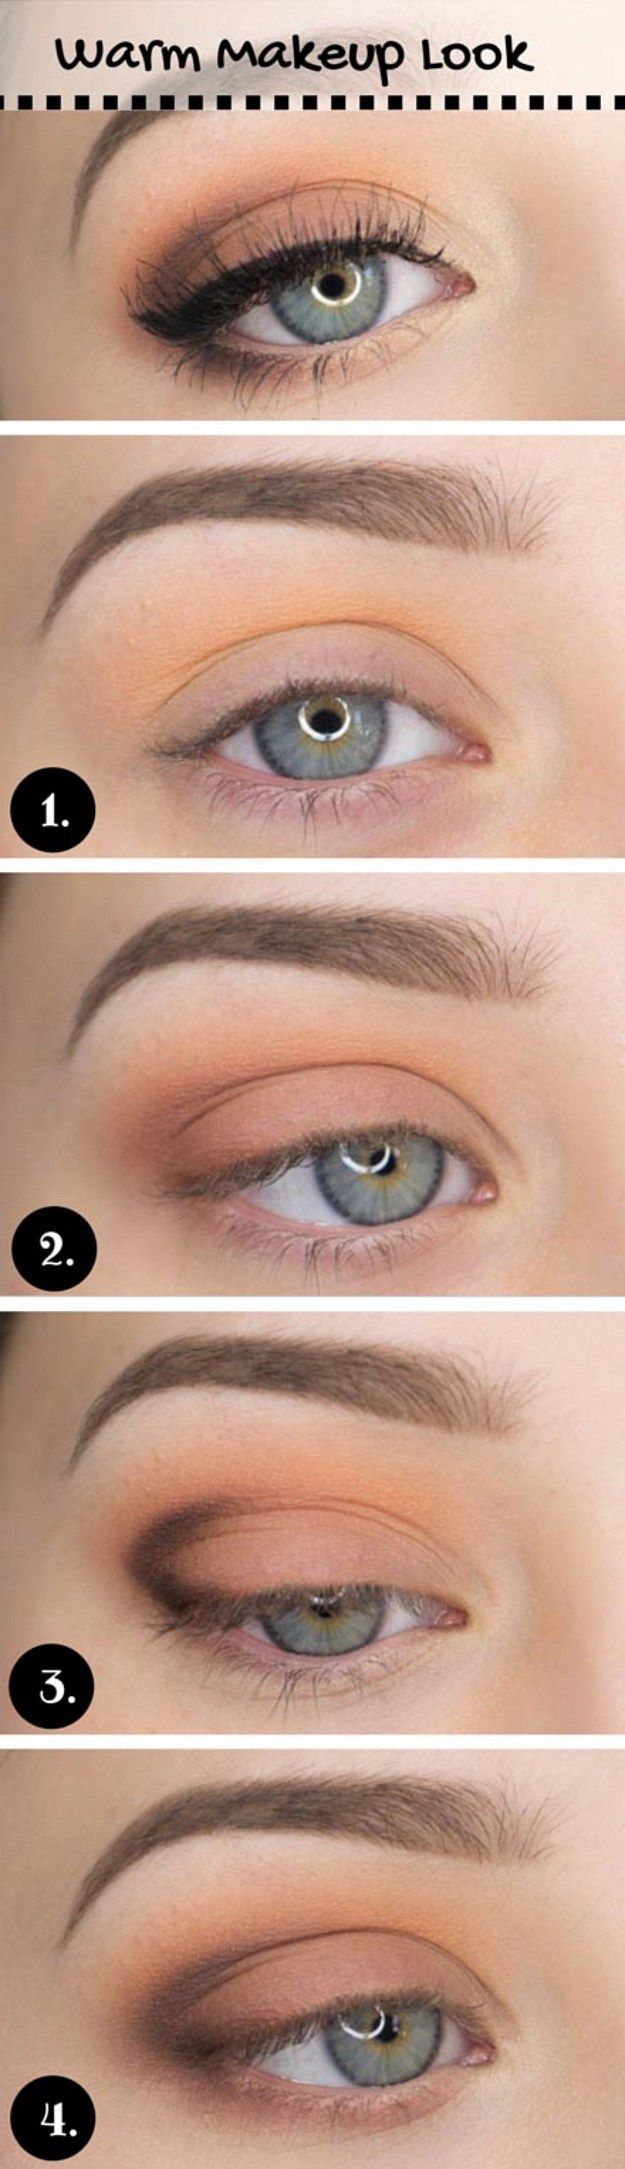 How to Do Casual Makeup Look | Everyday Makeup by Makeup Tutorials at www.makeup...